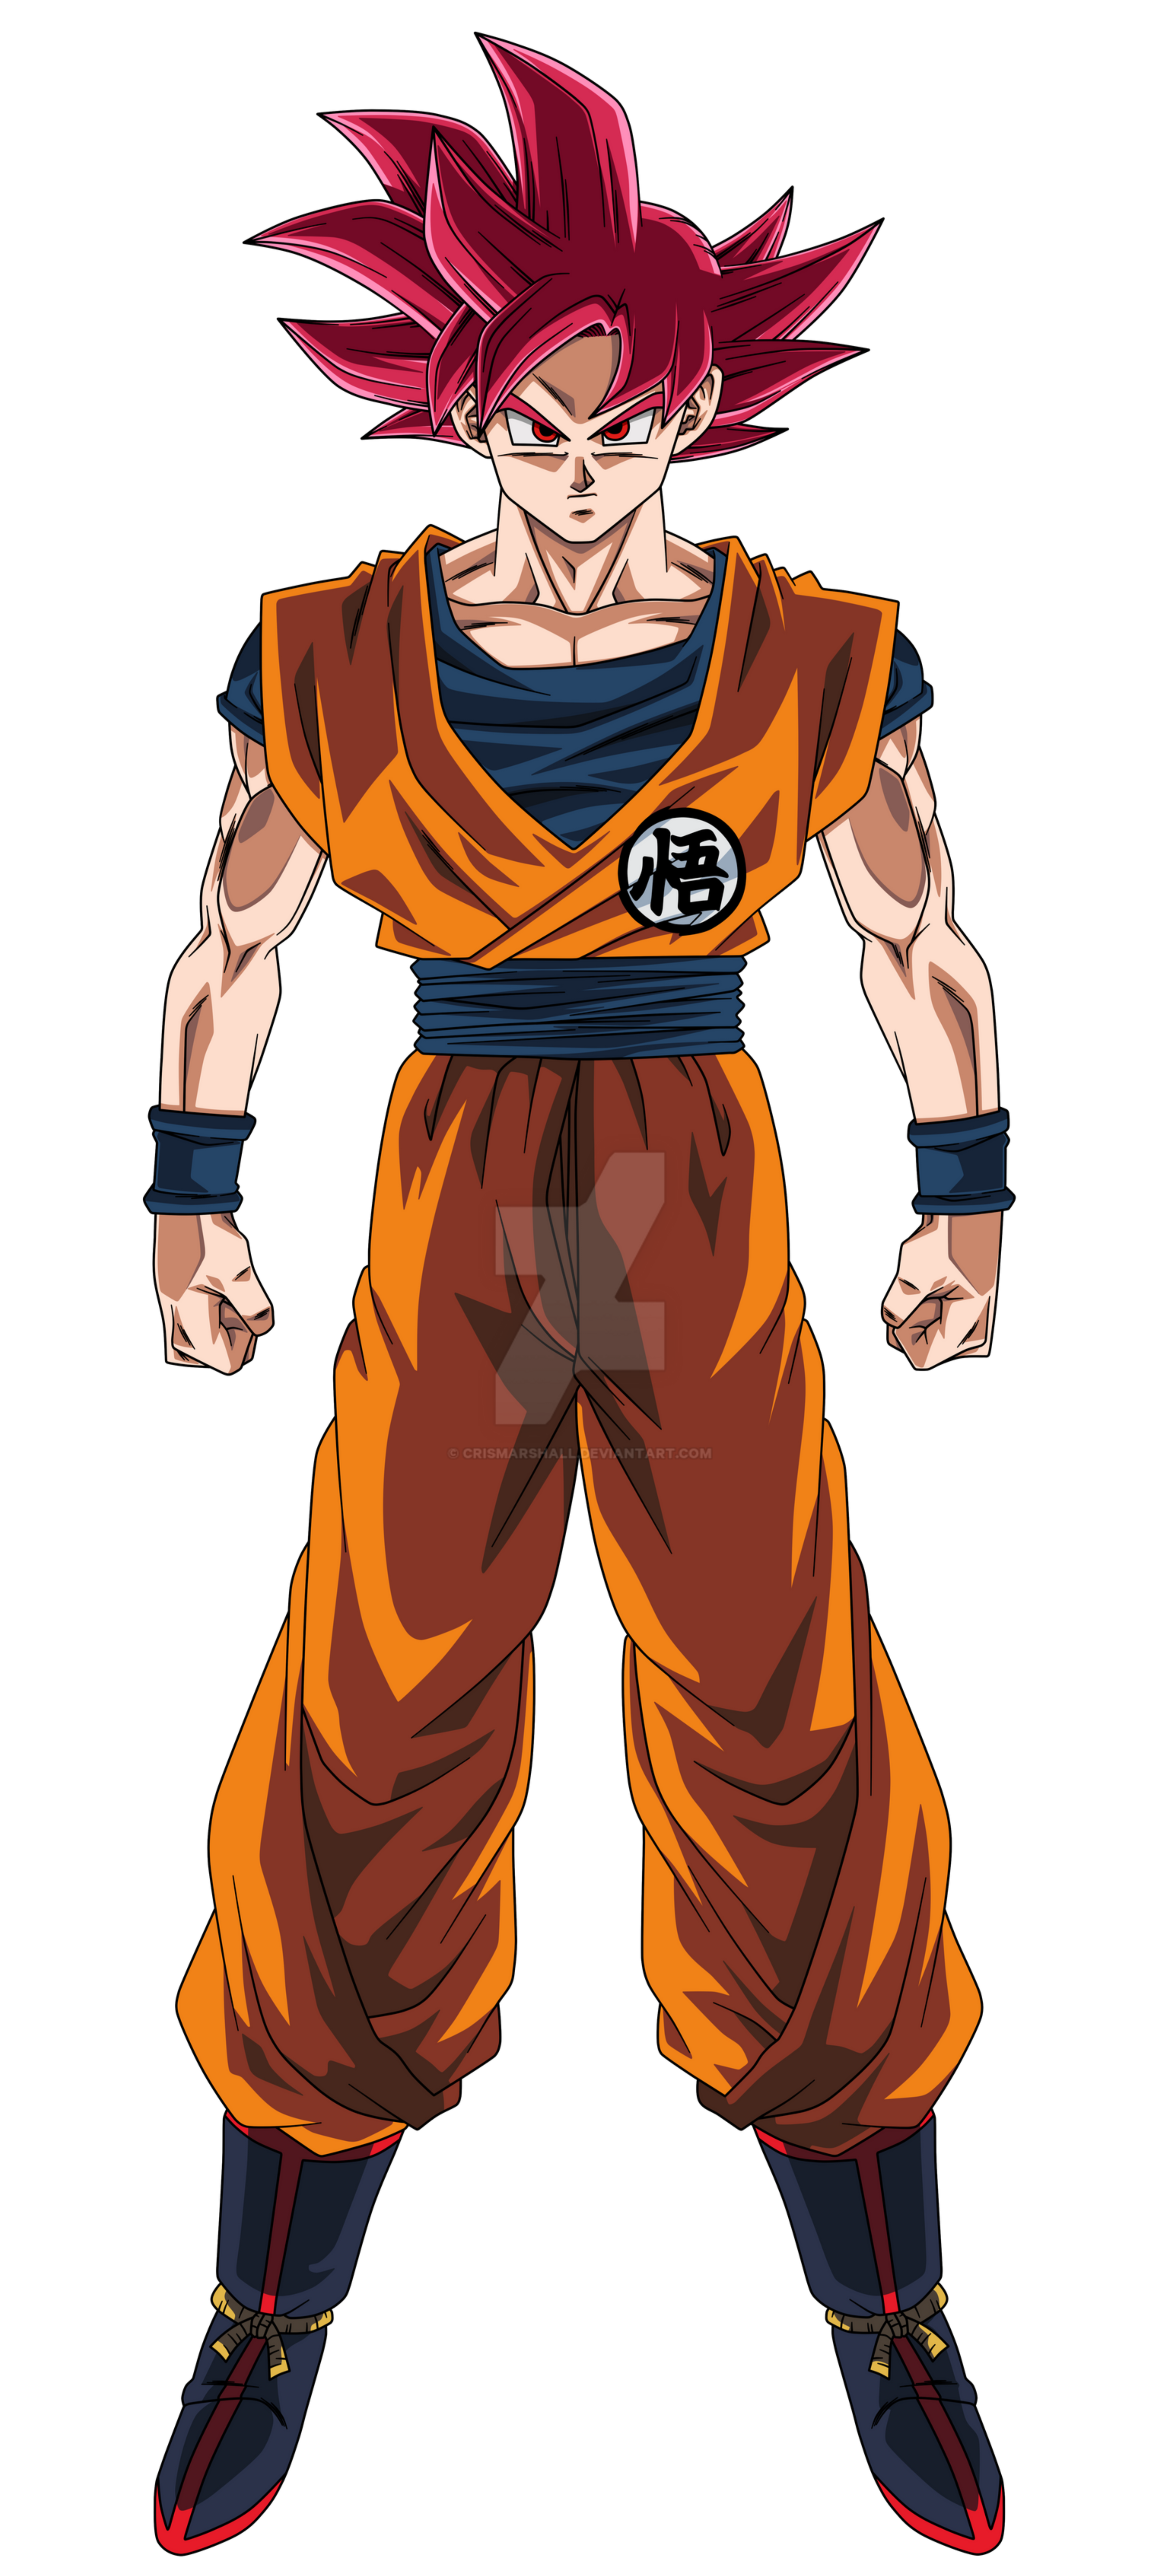 Goku (Super Saiyan God) by MdShakibulHasan on DeviantArt